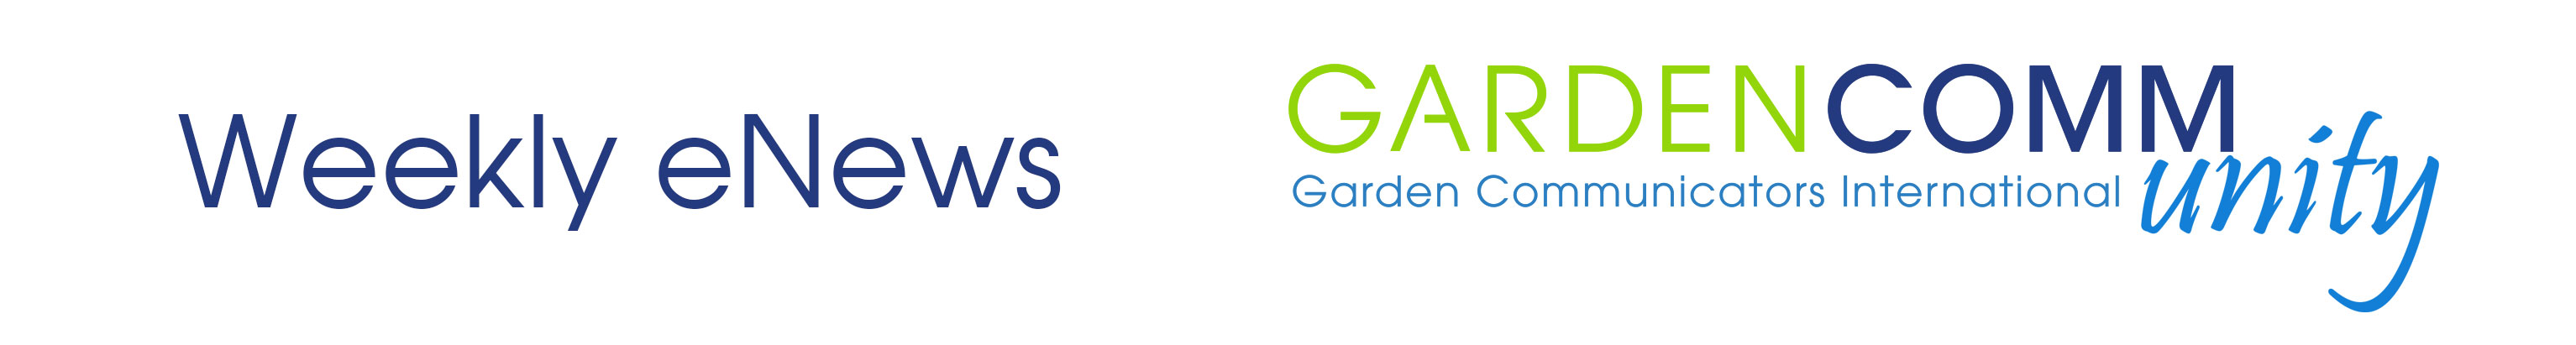 GardenComm_unity_w-tag_enews